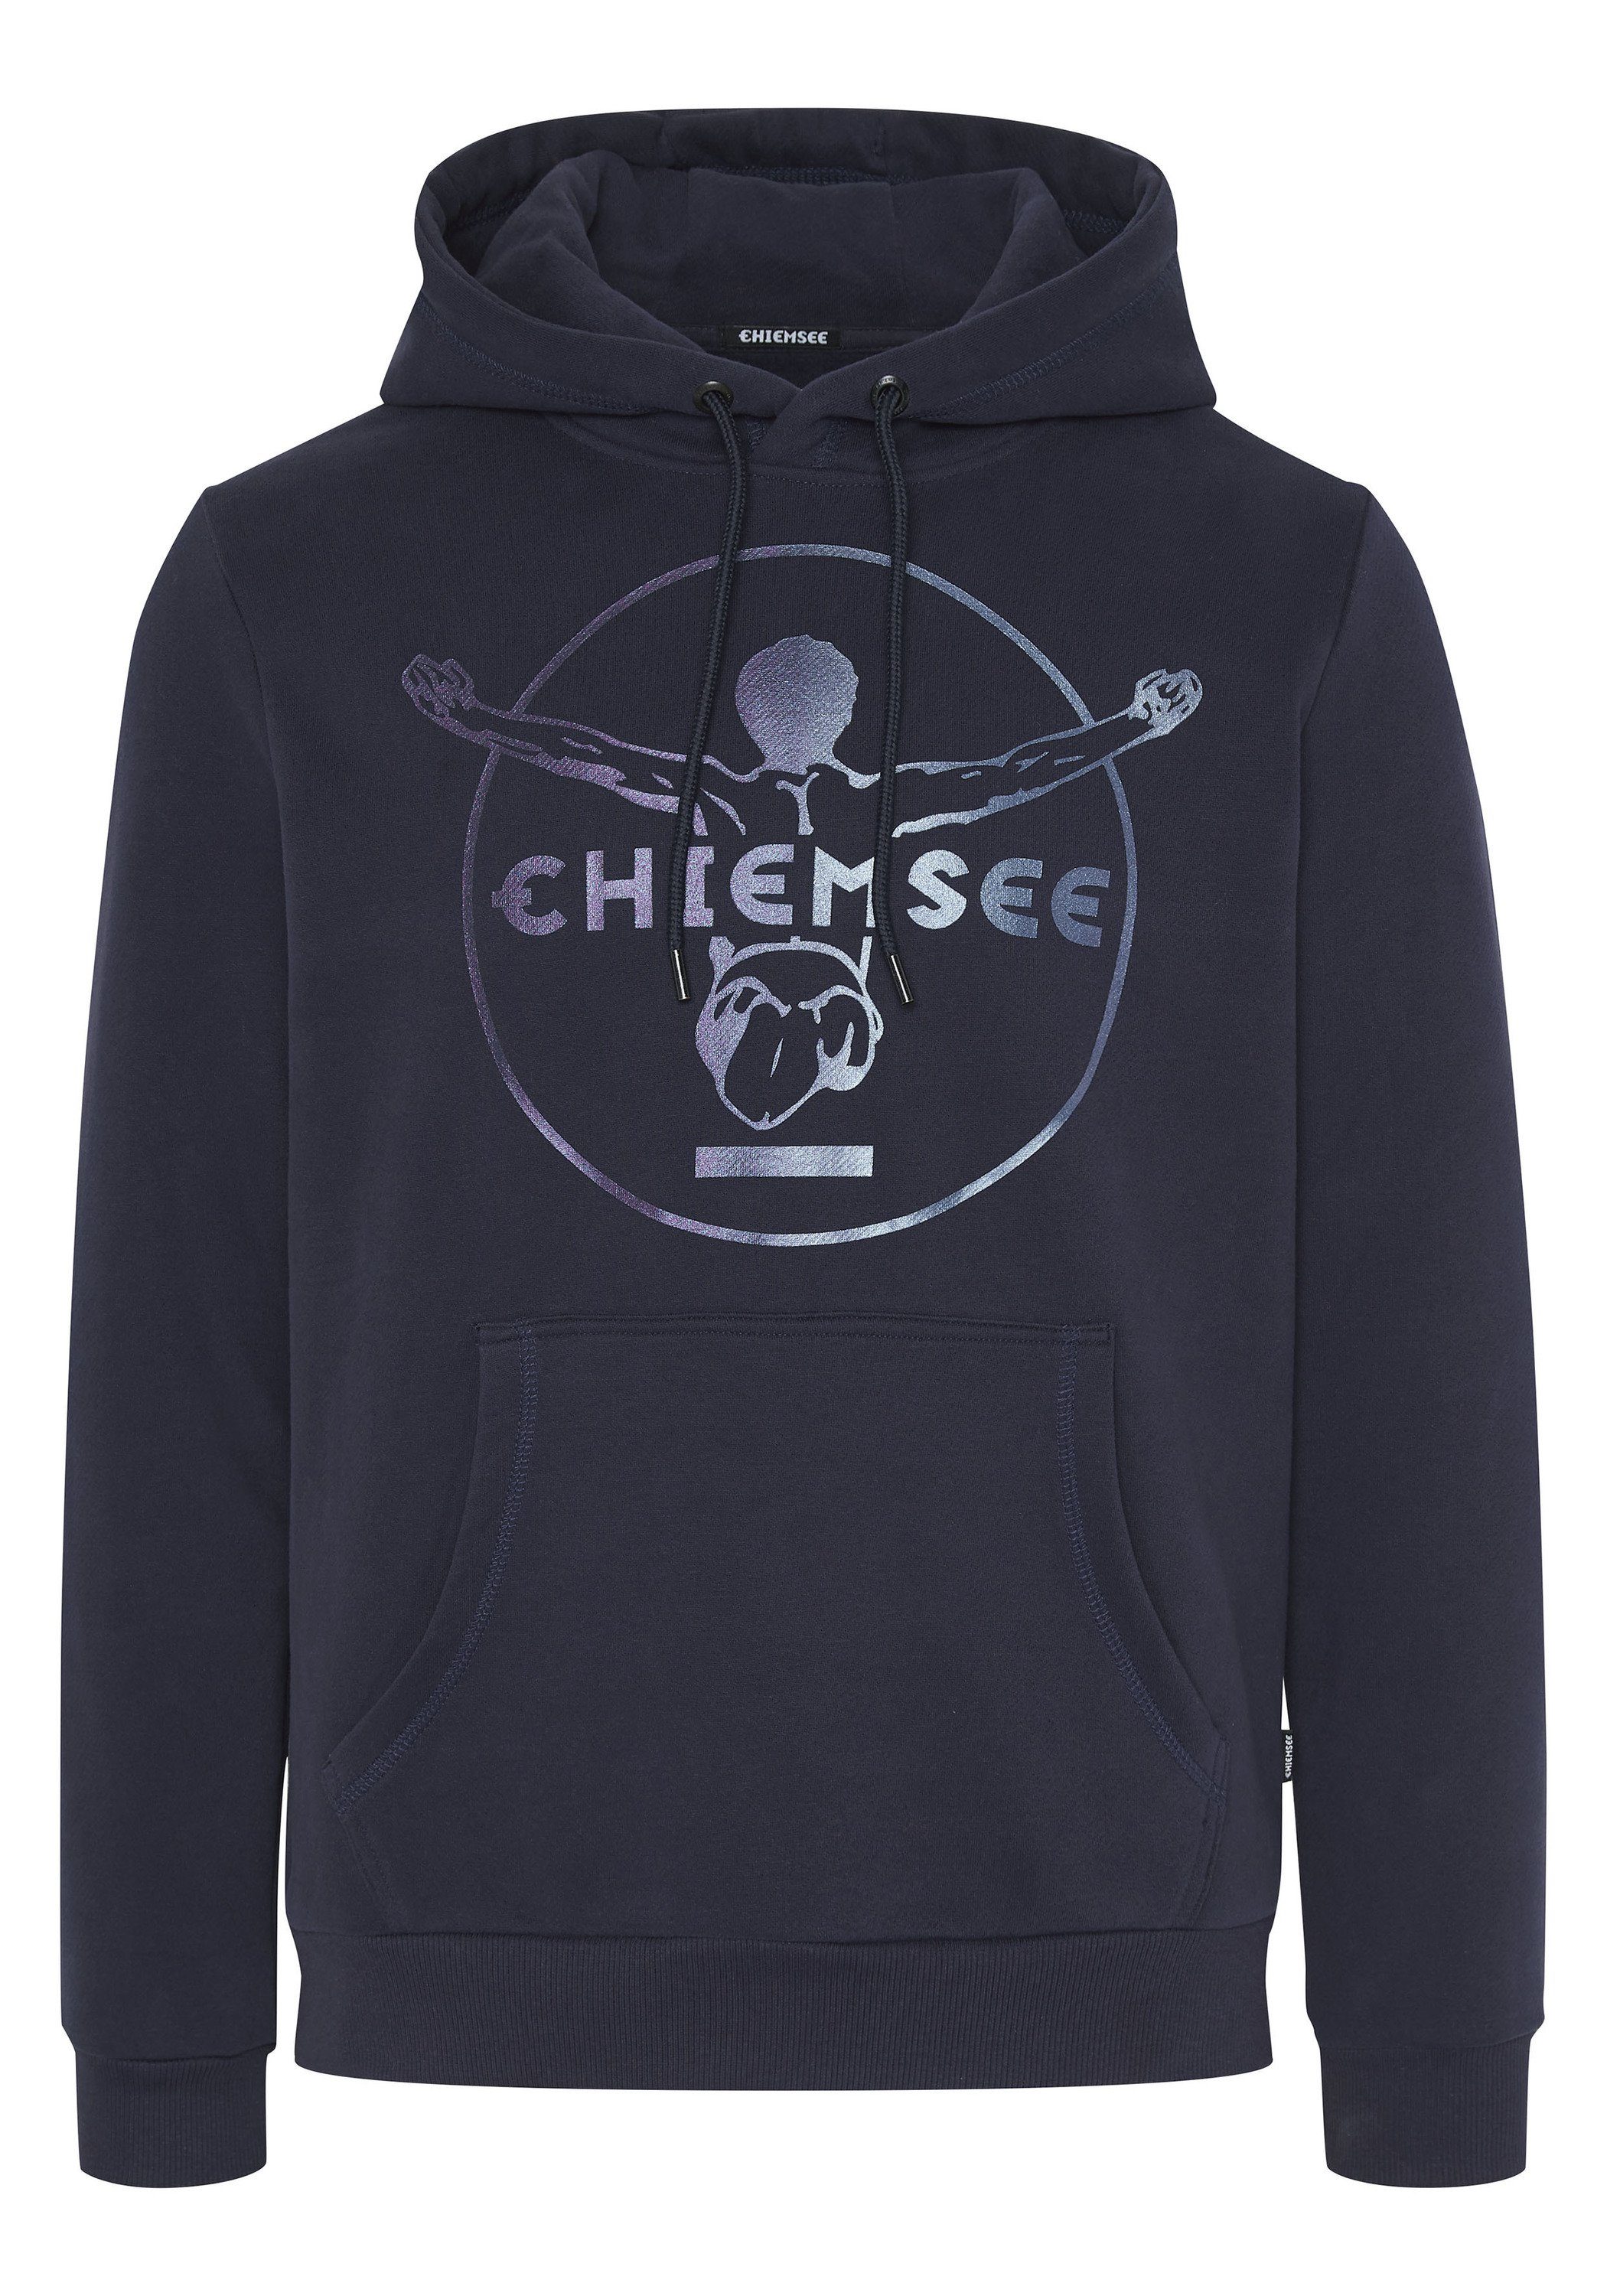 Chiemsee Kapuzensweatshirt Hoodie mit Jumper-Motiv 1 dunkel blau